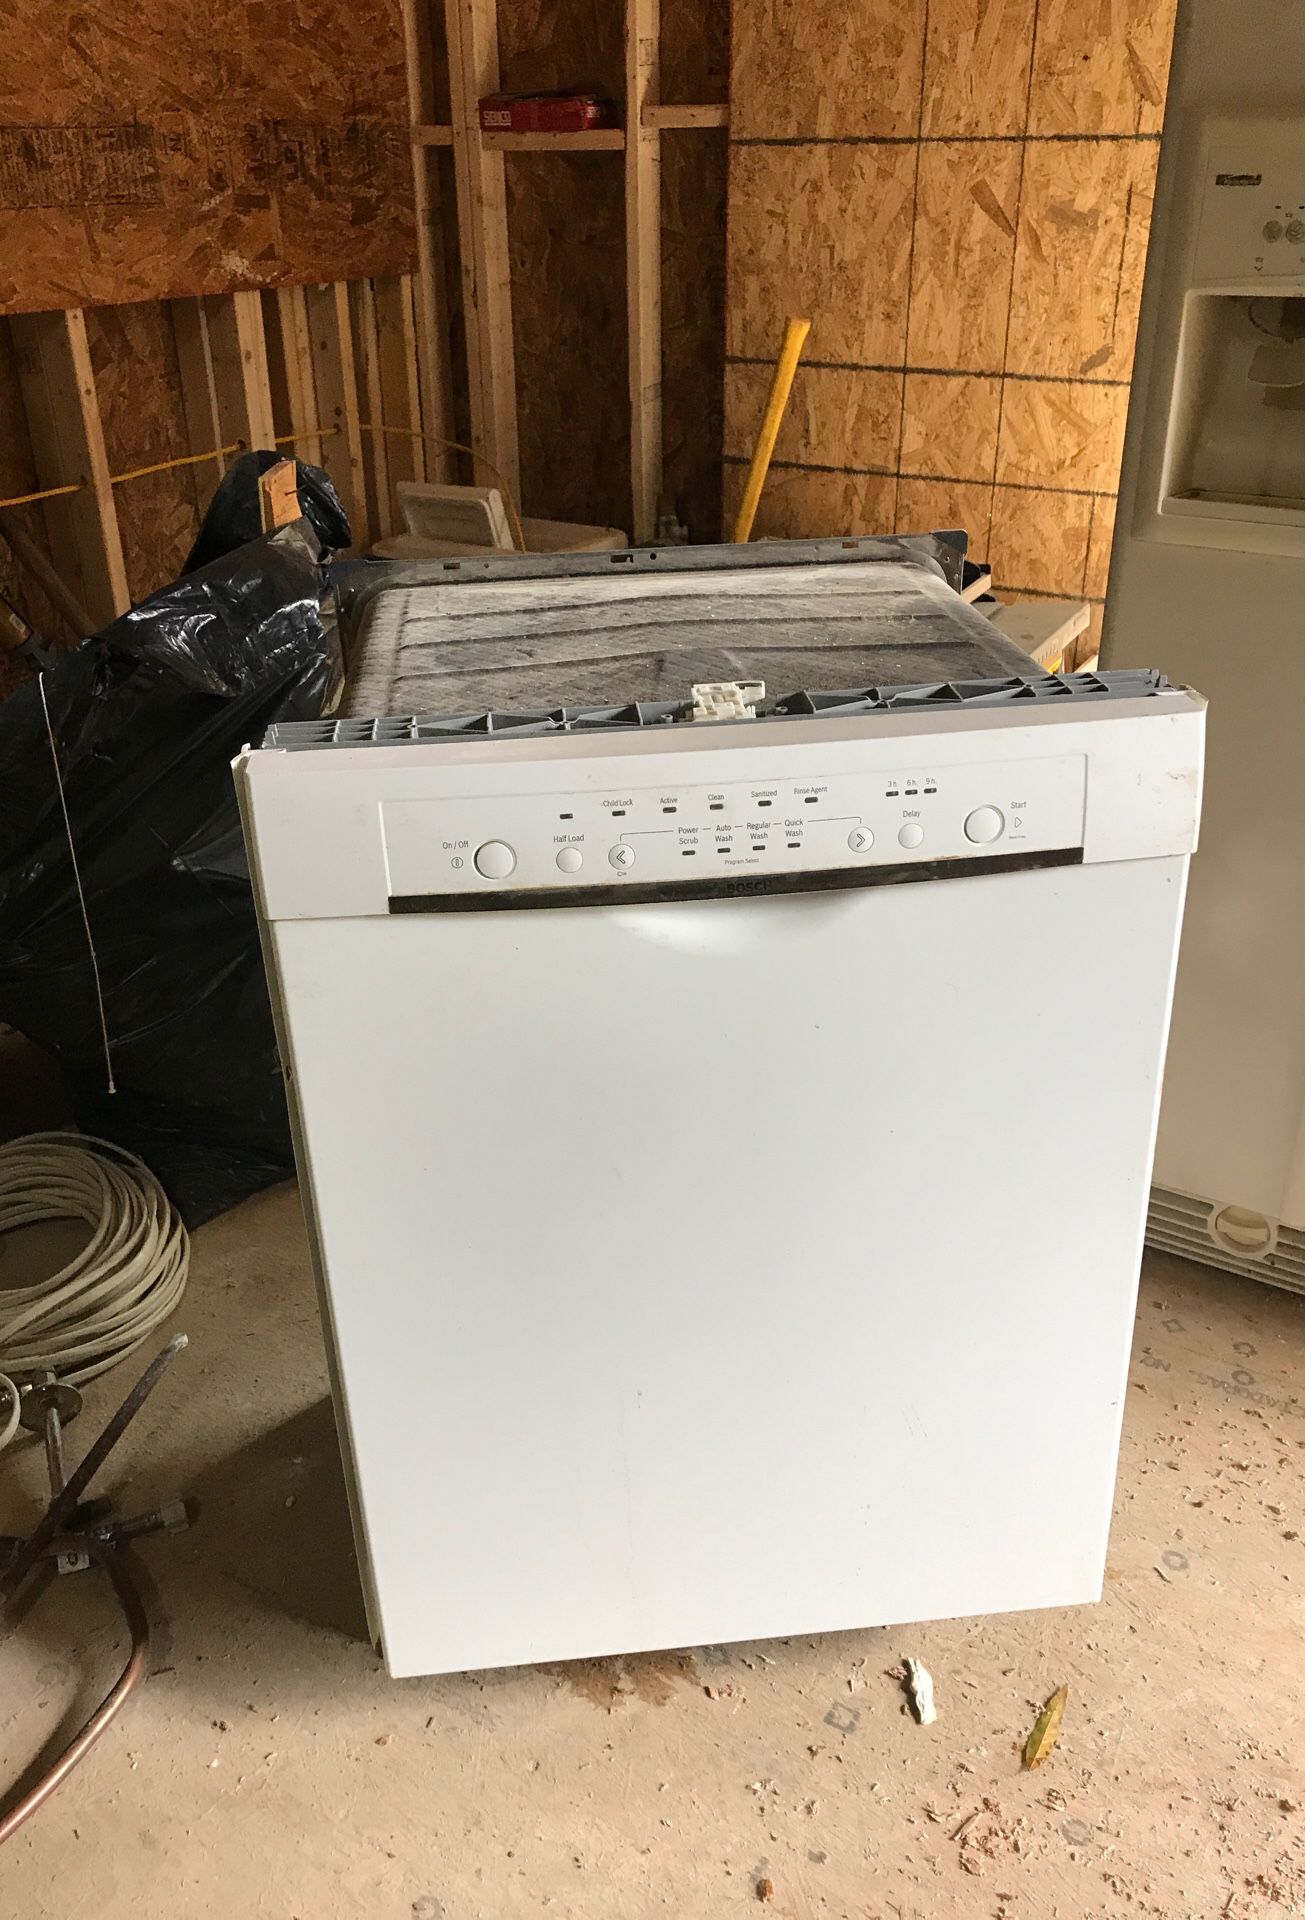 Dishwasher and refrigerator used